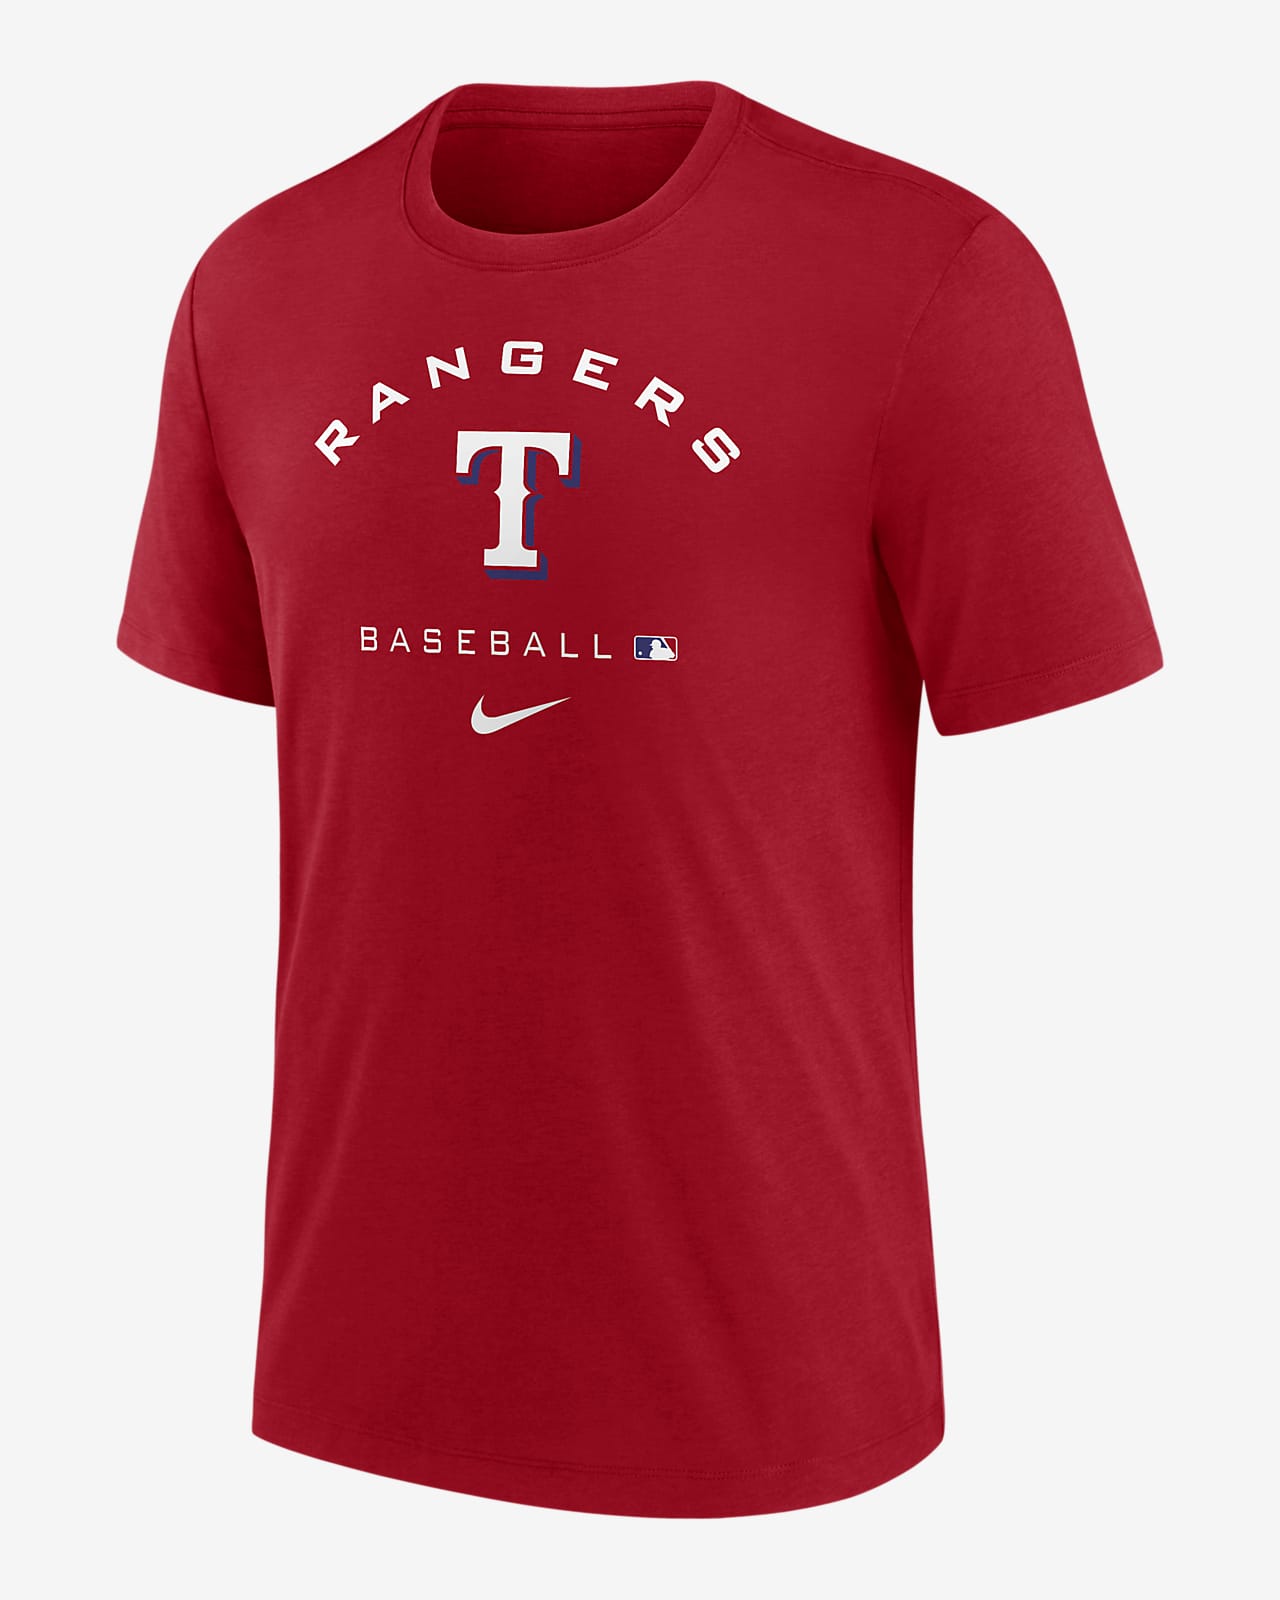 Texas Rangers Peagle Power Shirt, Hoodie, Sweatshirt